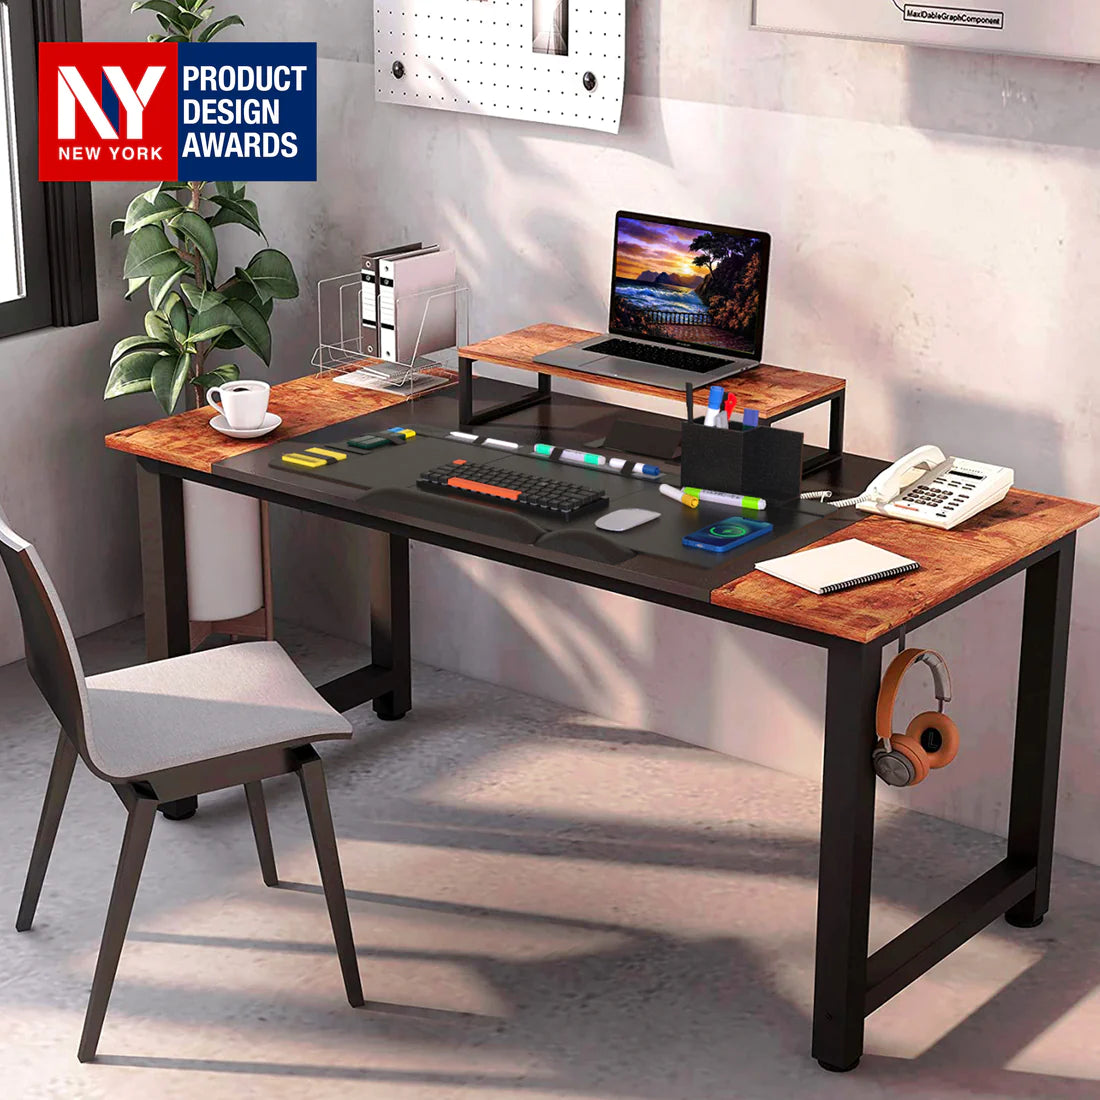 Logitech Desk Mat - Studio Series, Multifunctional Large Desk Pad